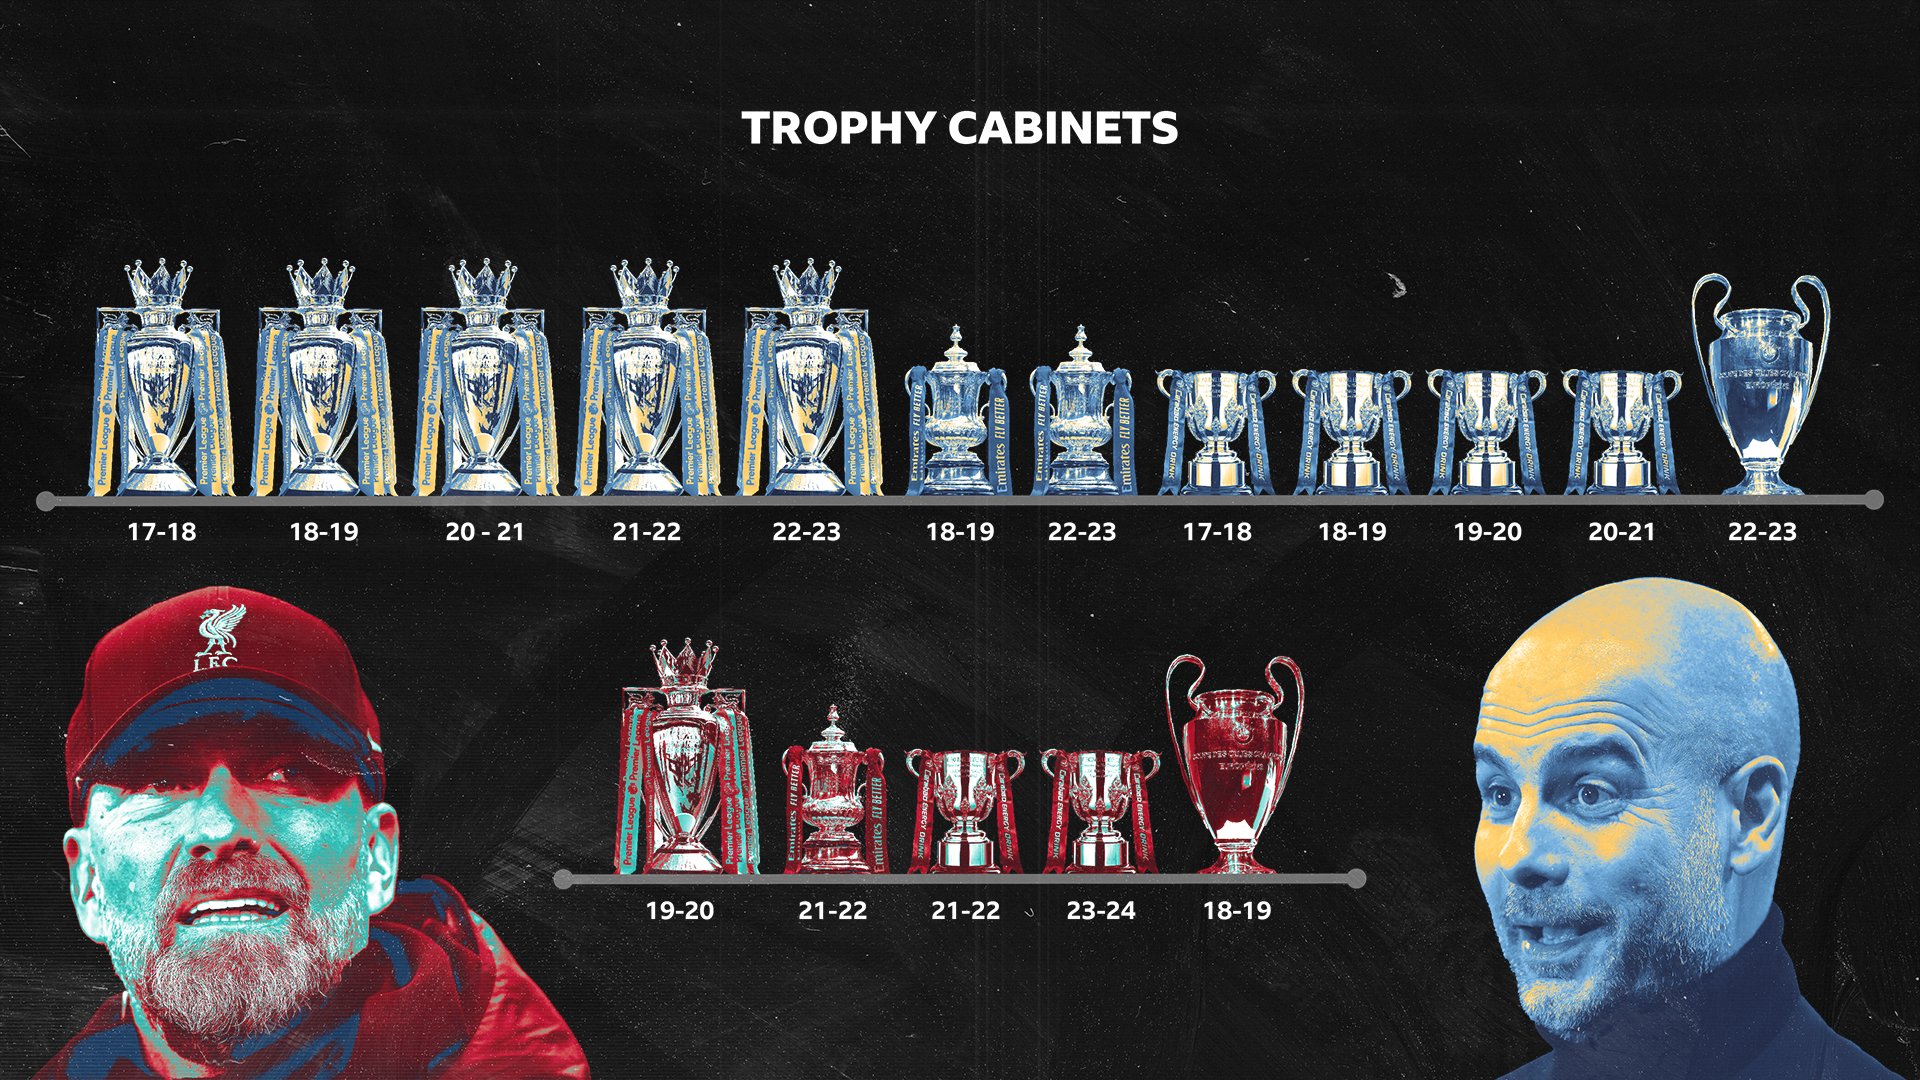 Pep Guardiola and Jurgen Klopp's trophies in England